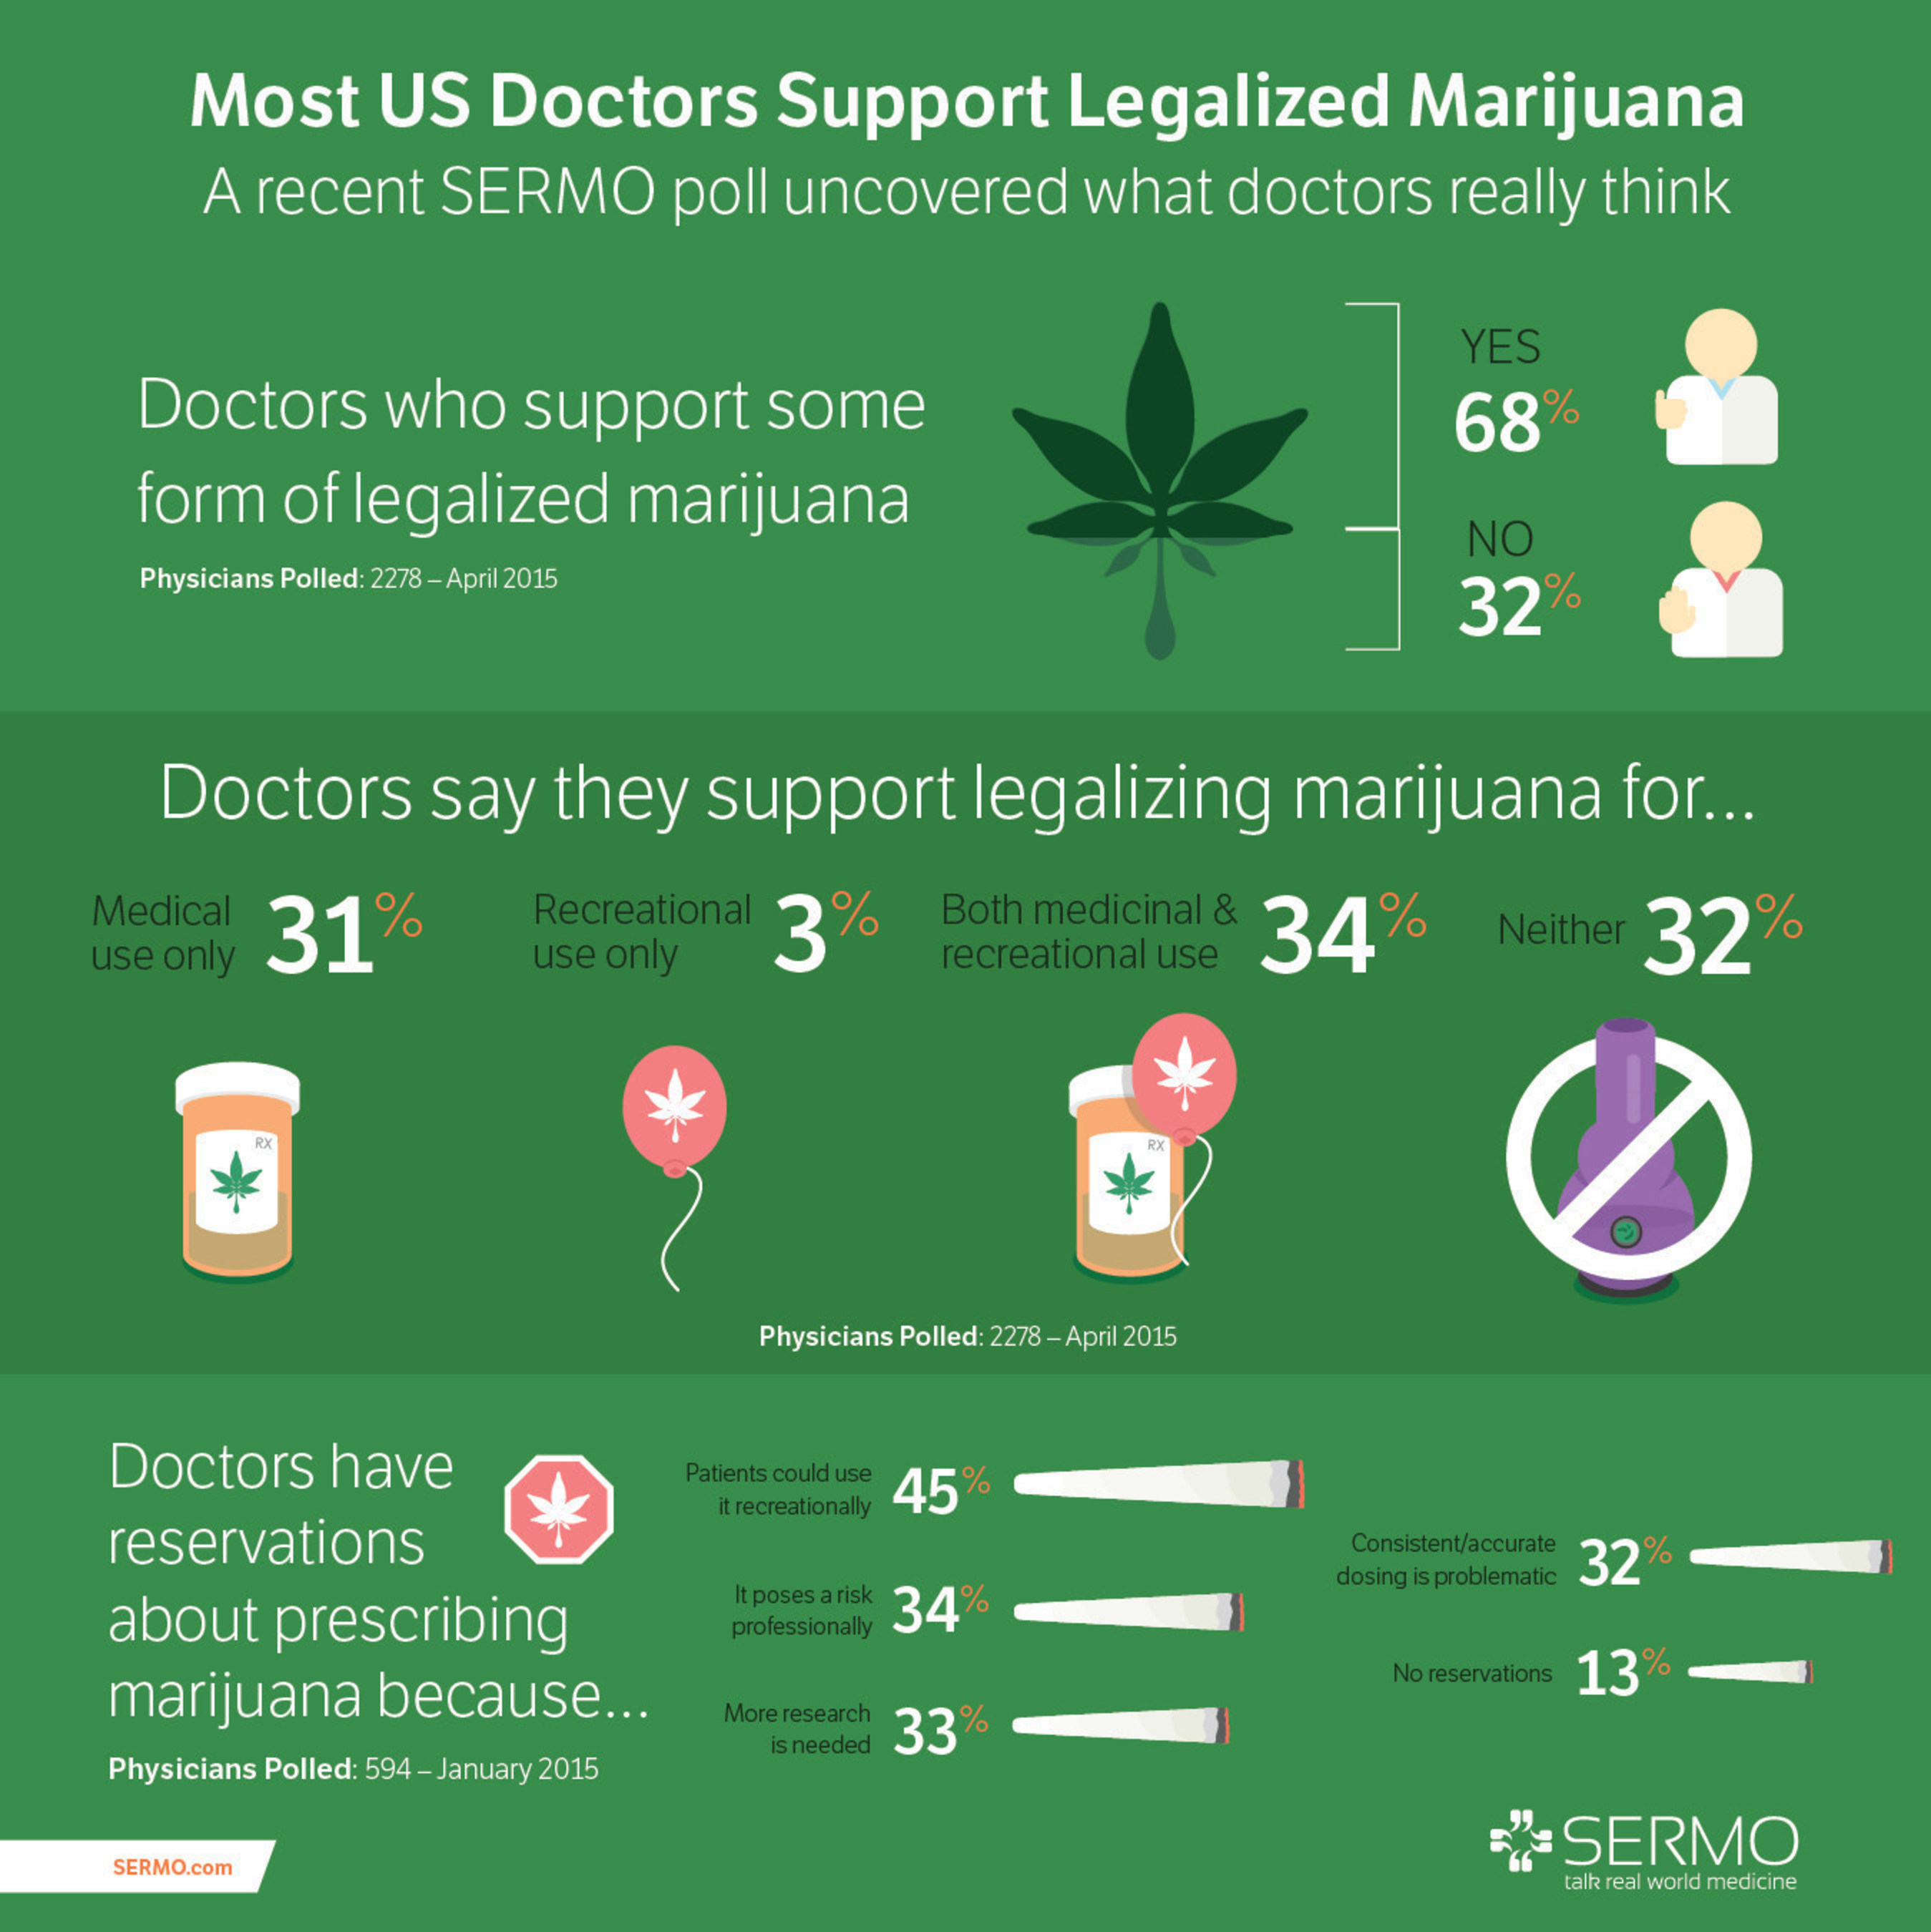 SERMO Marijuana Poll Results from April 20, 2015